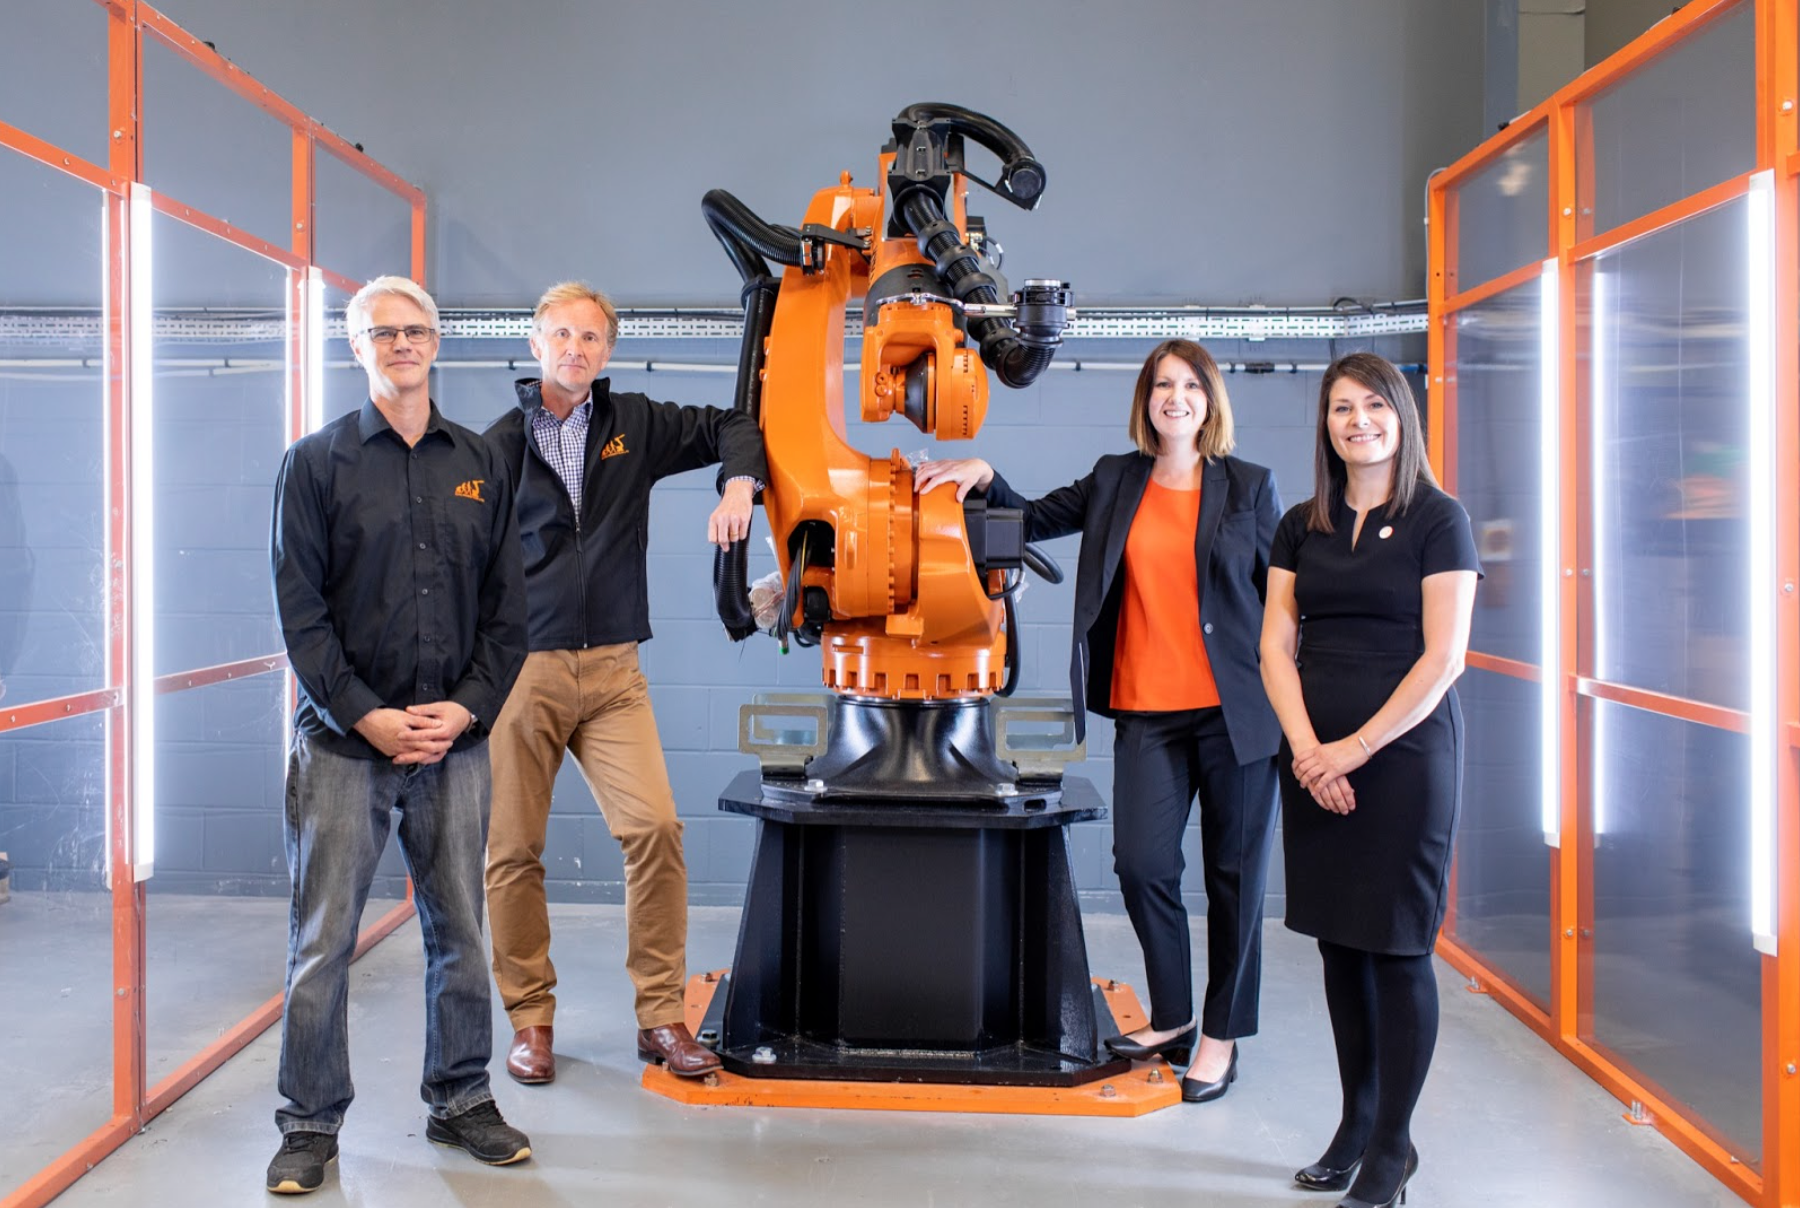 CNC Robotics management team: Jason Barker, Bart Simpson, Philippa Glover and Madina Barker